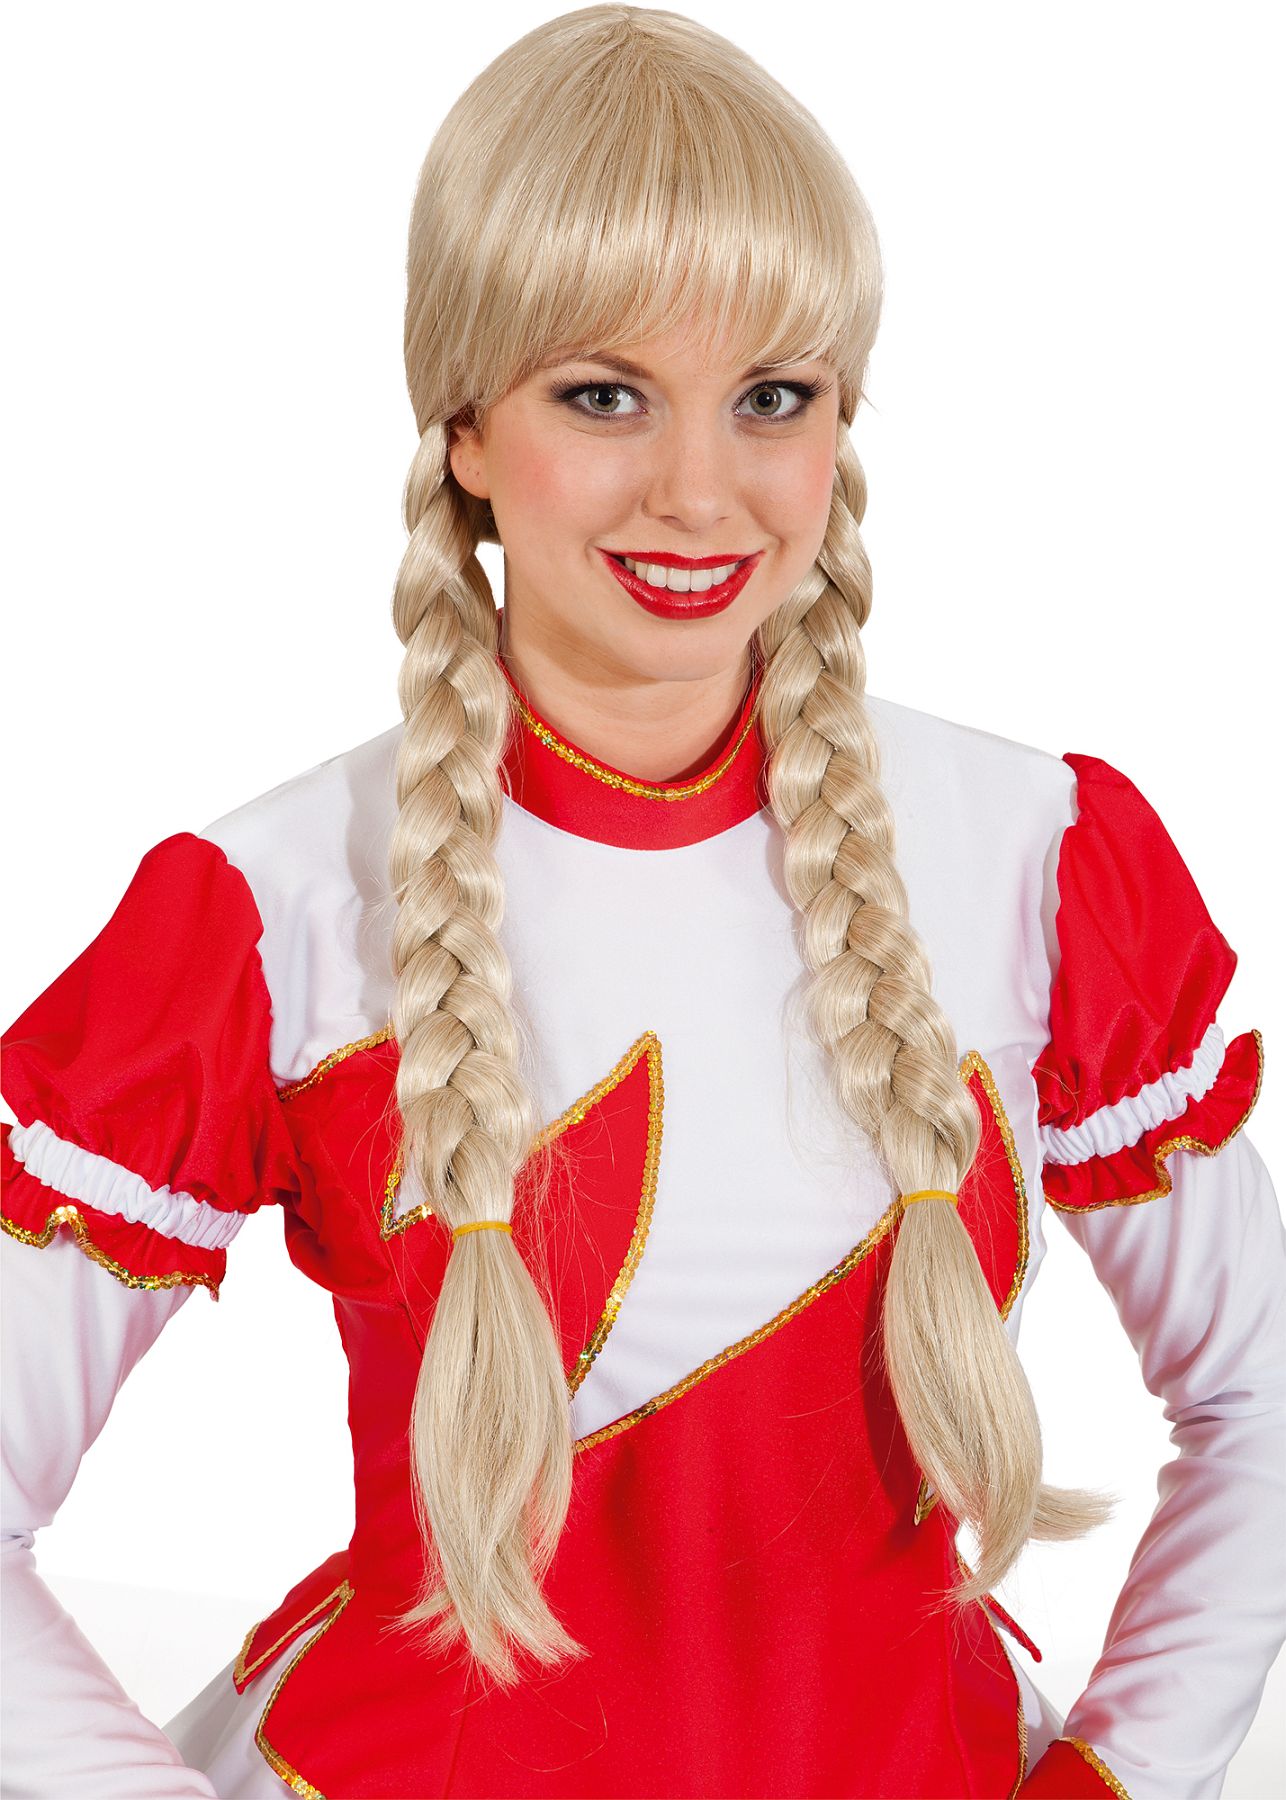 Guard dancing wig, light blonde